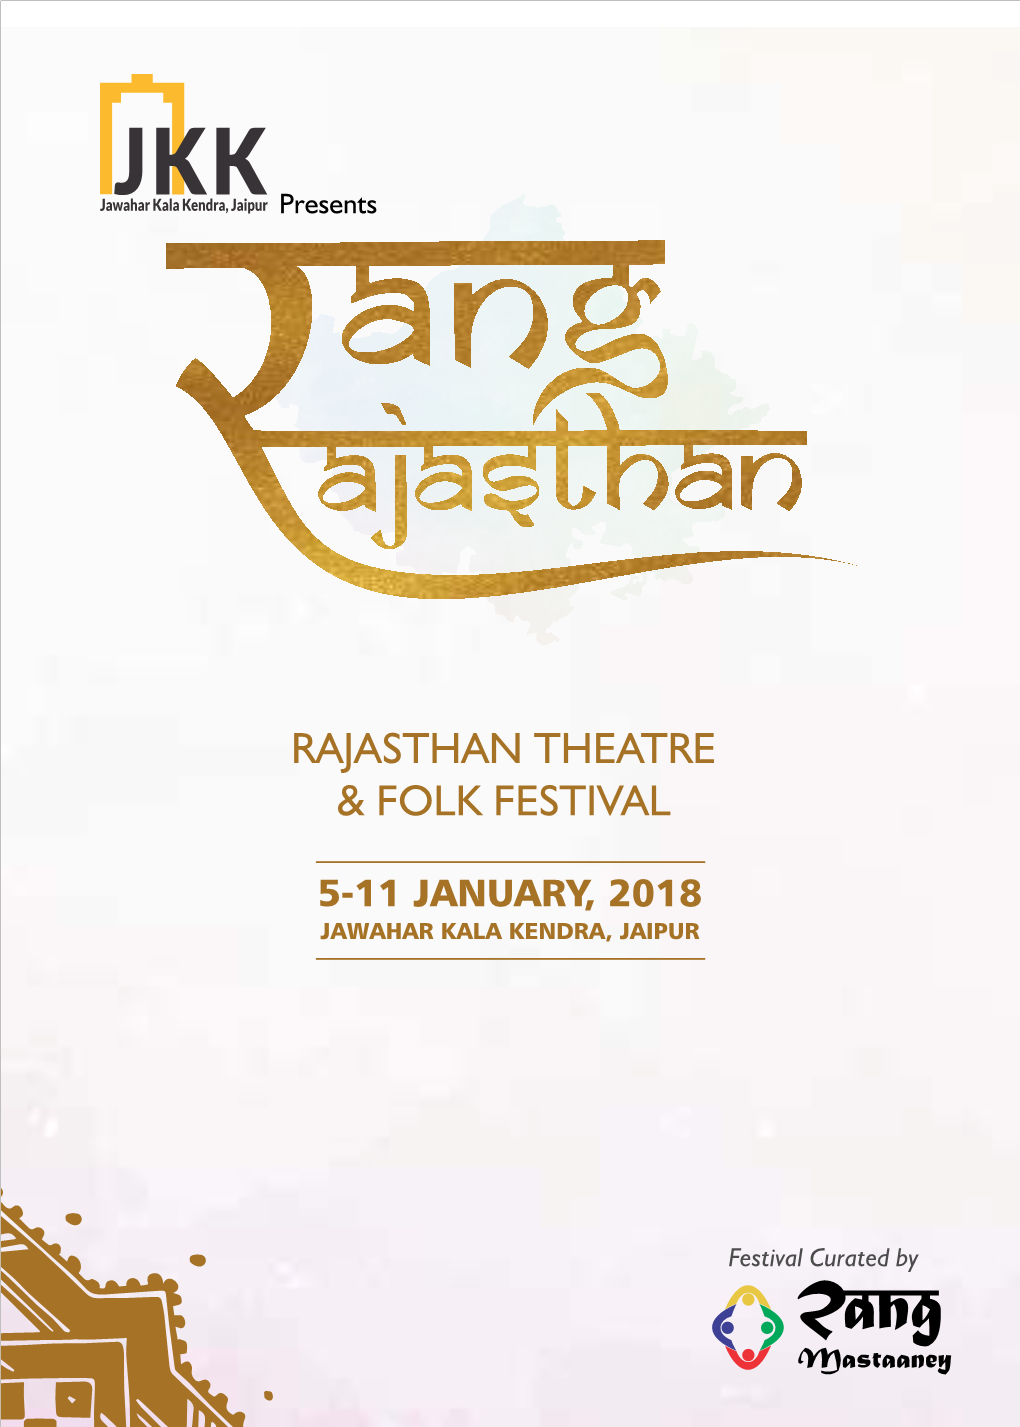 Rajasthan Theatre & Folk Festival